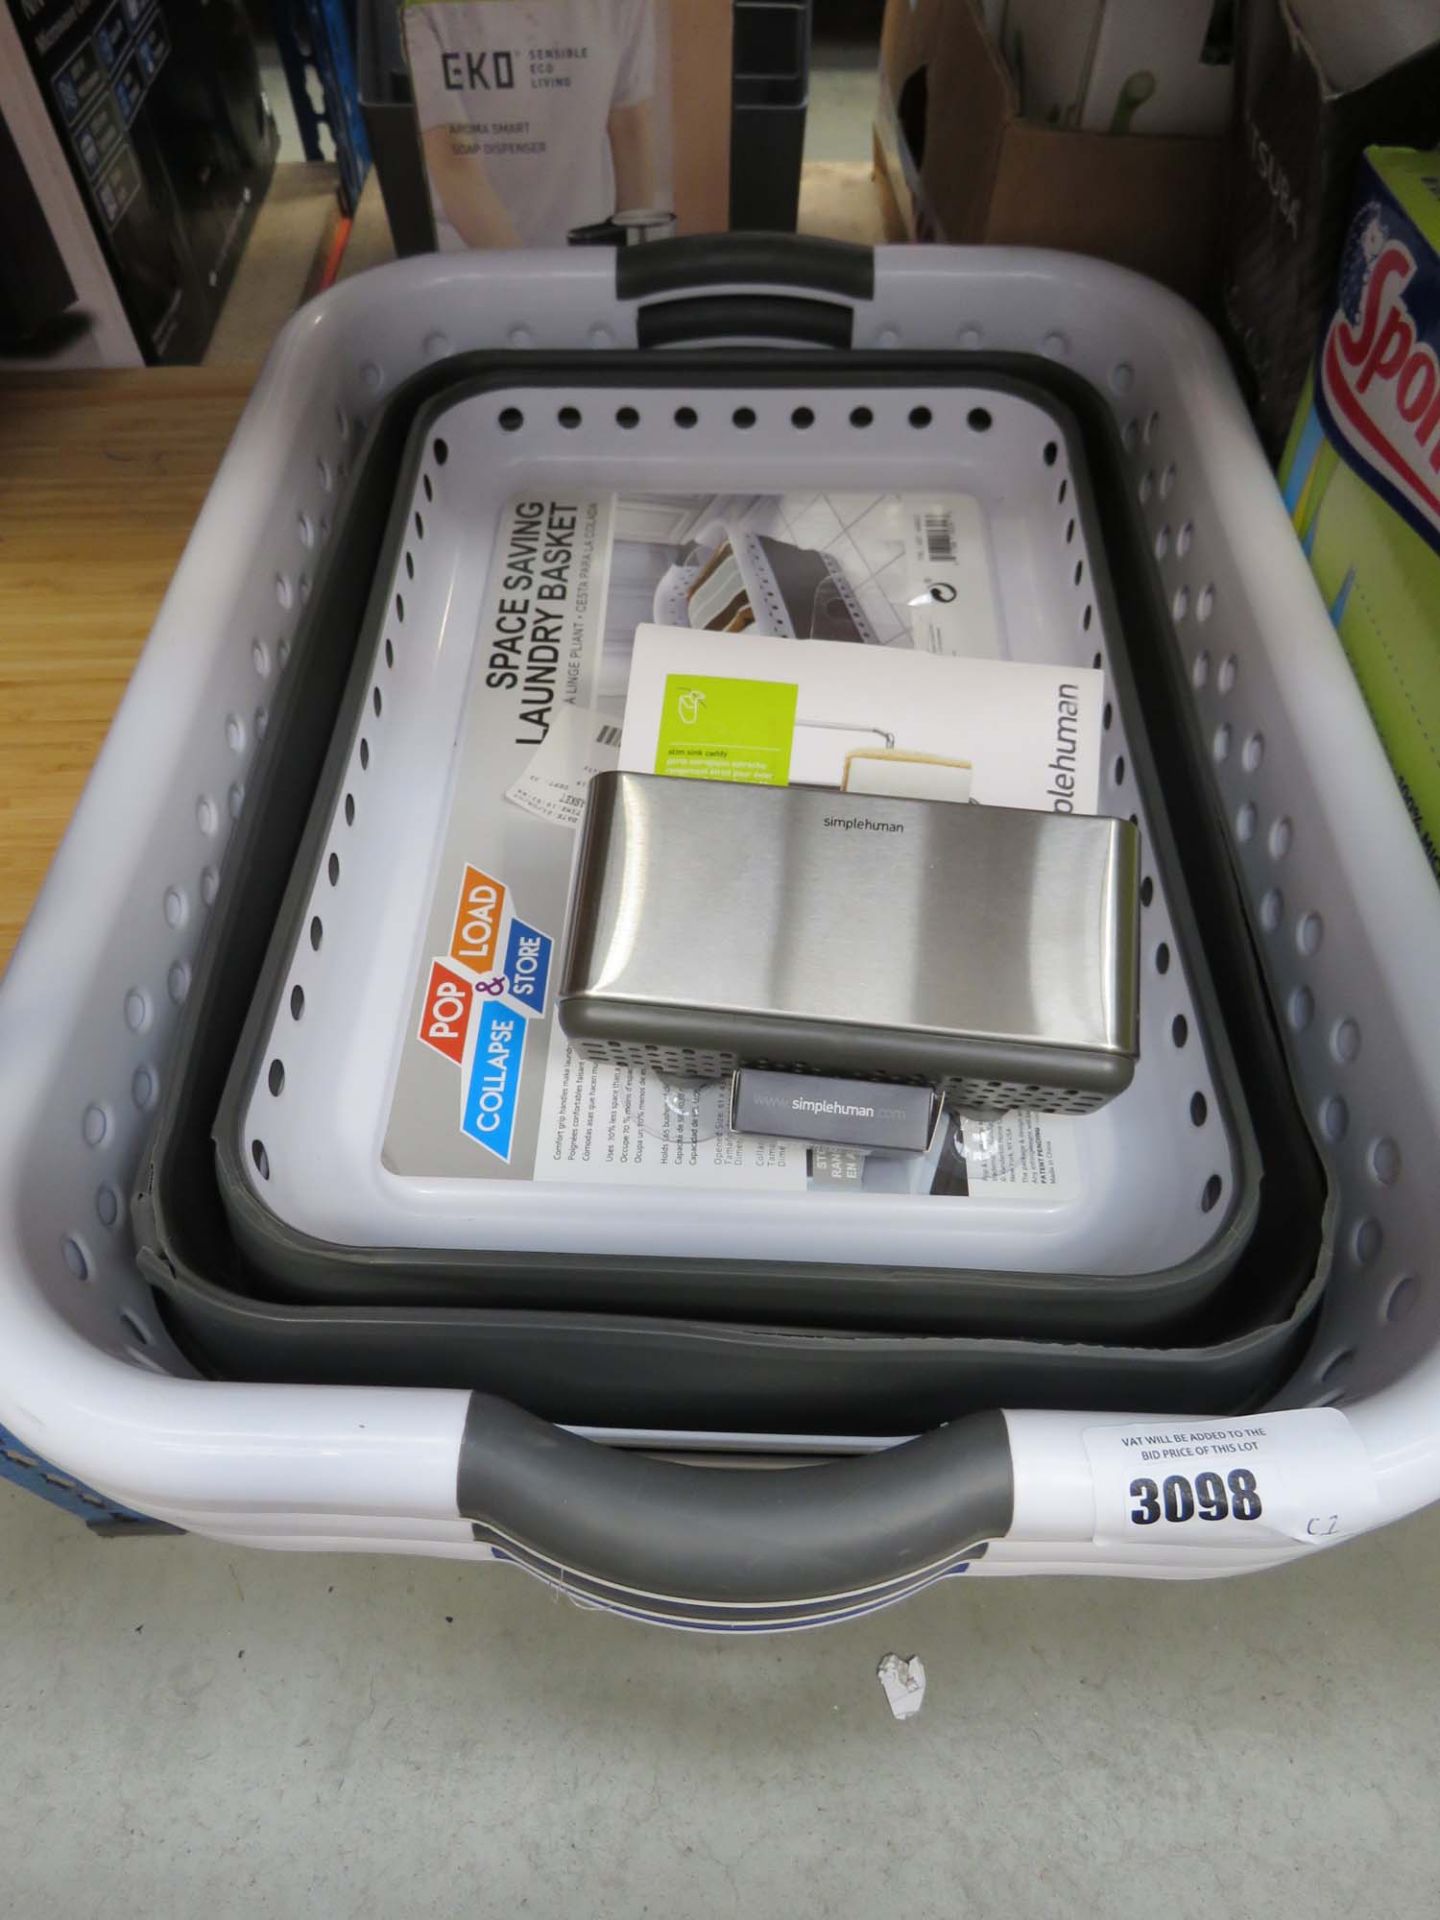 3 space saving laundry baskets plus a slim sink caddy